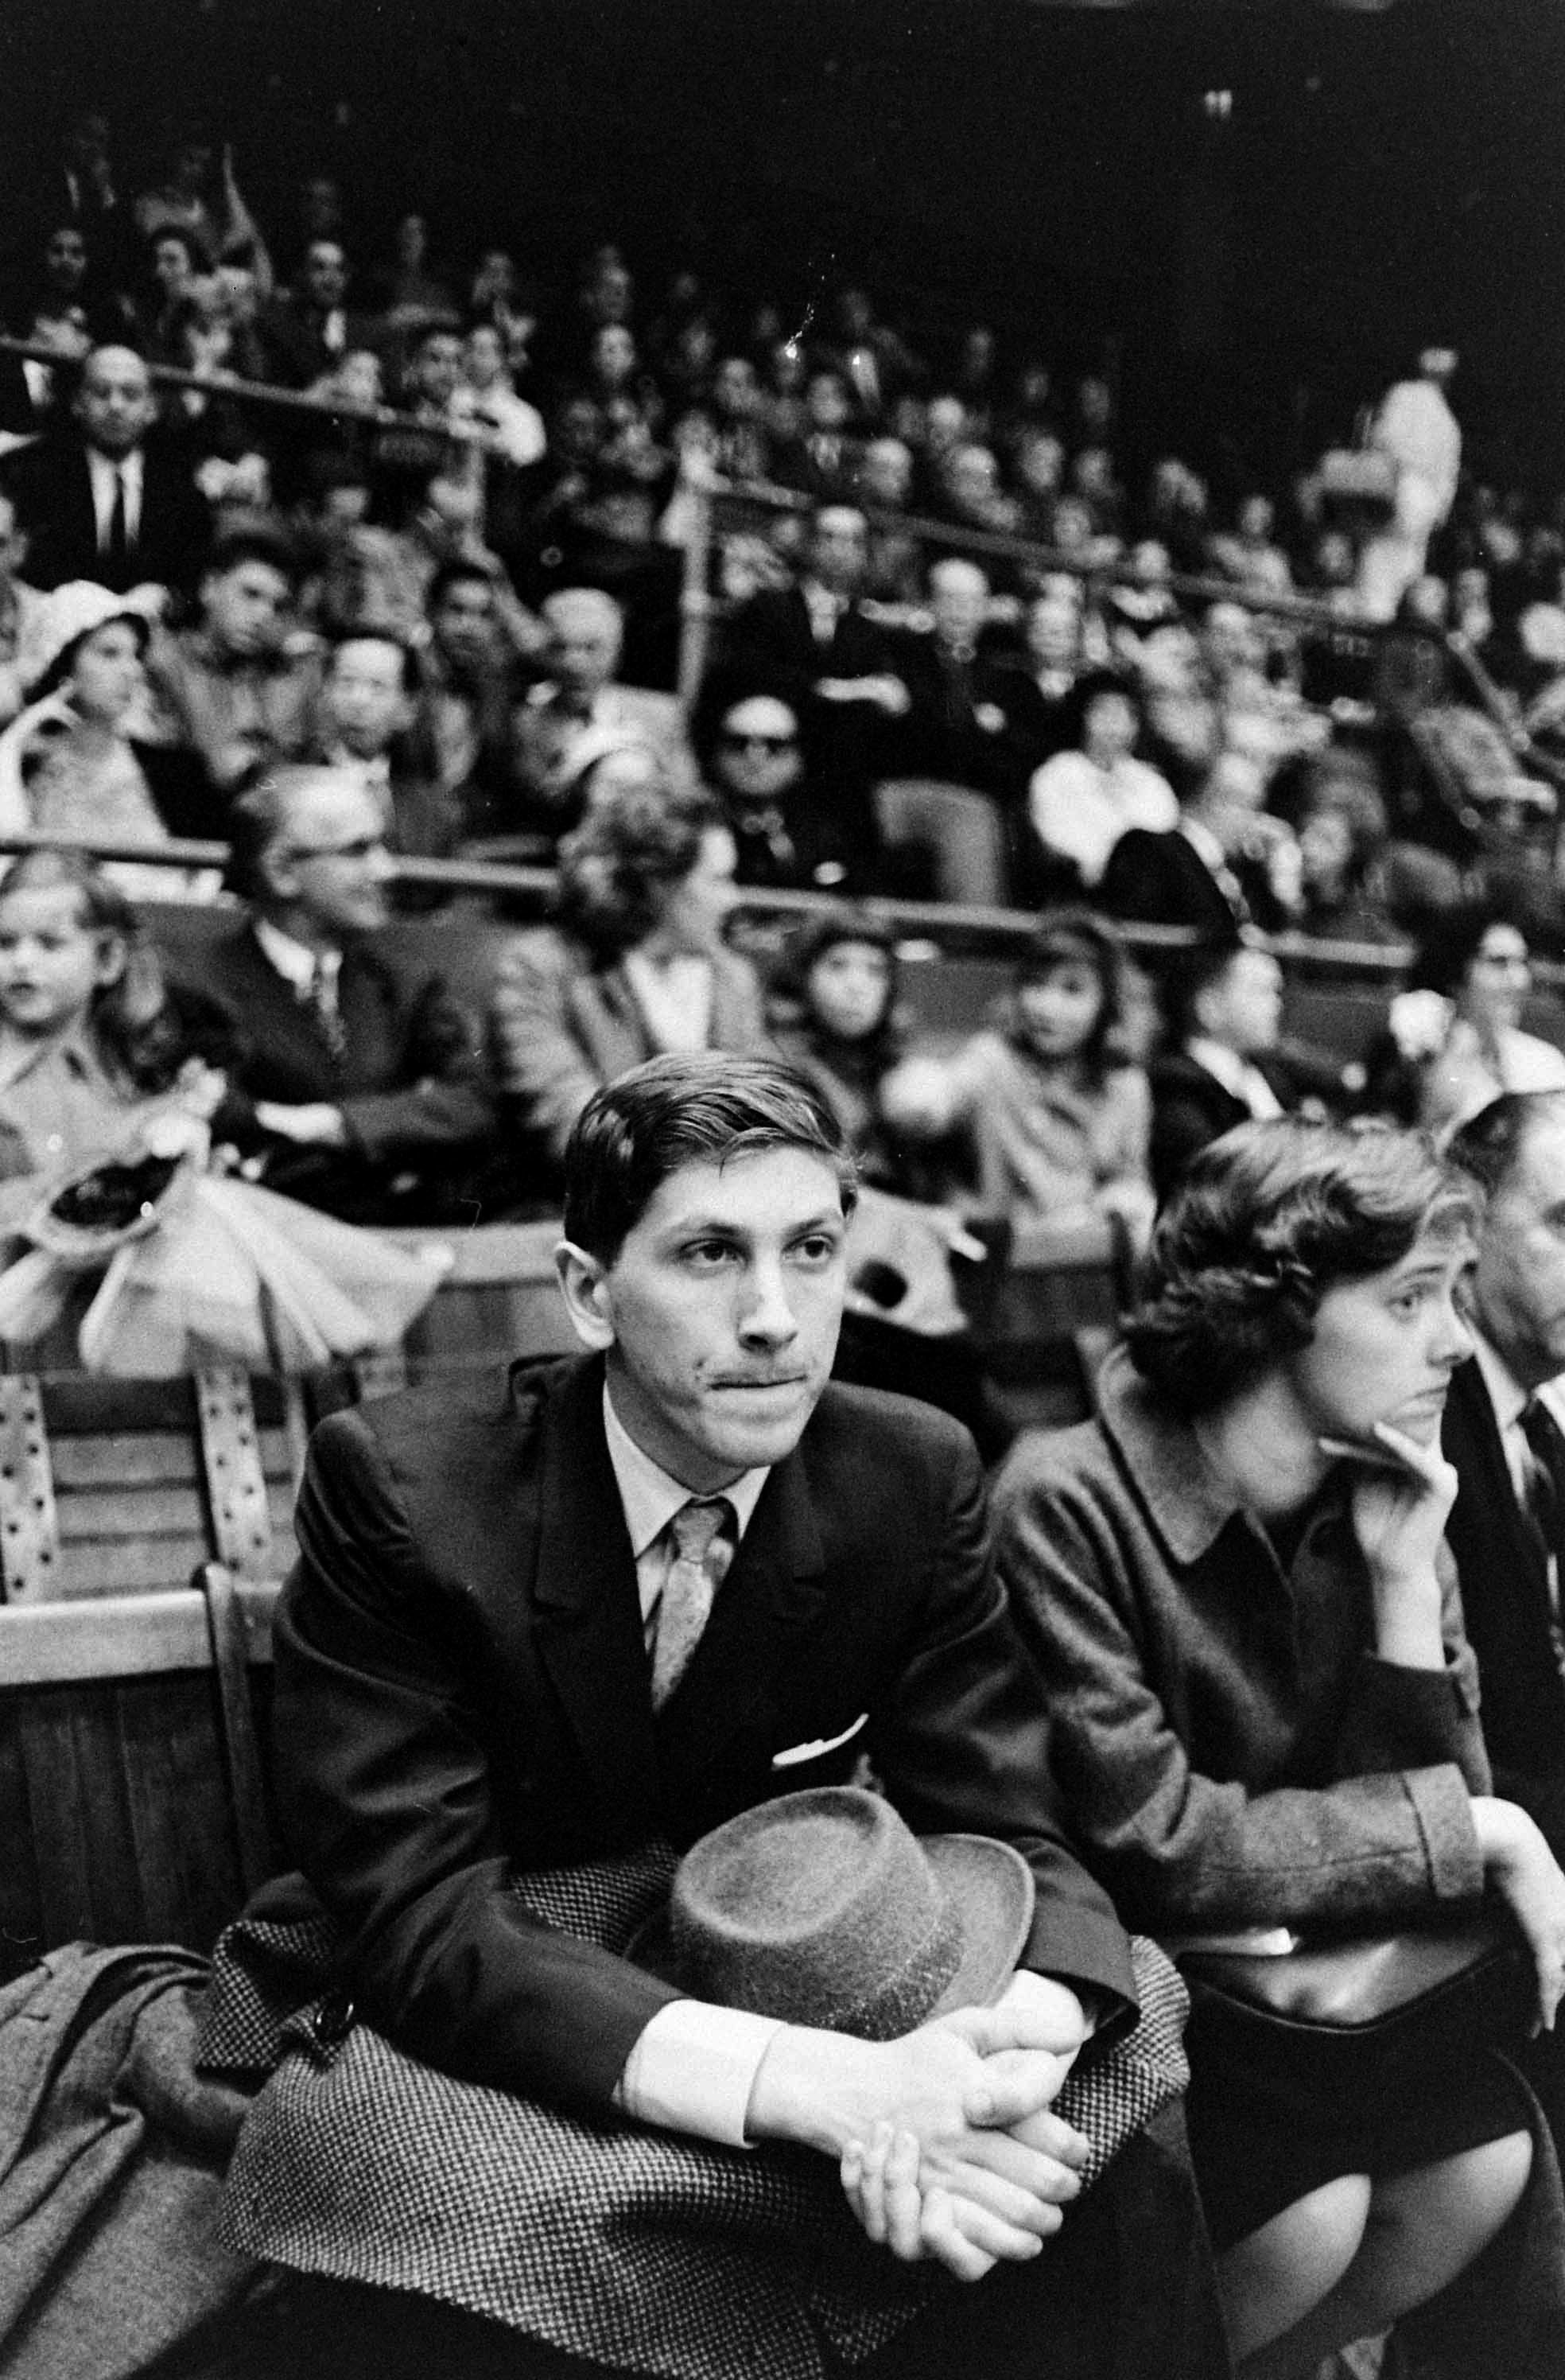 Bobby Fischer at a ballgame, New York, 1962.